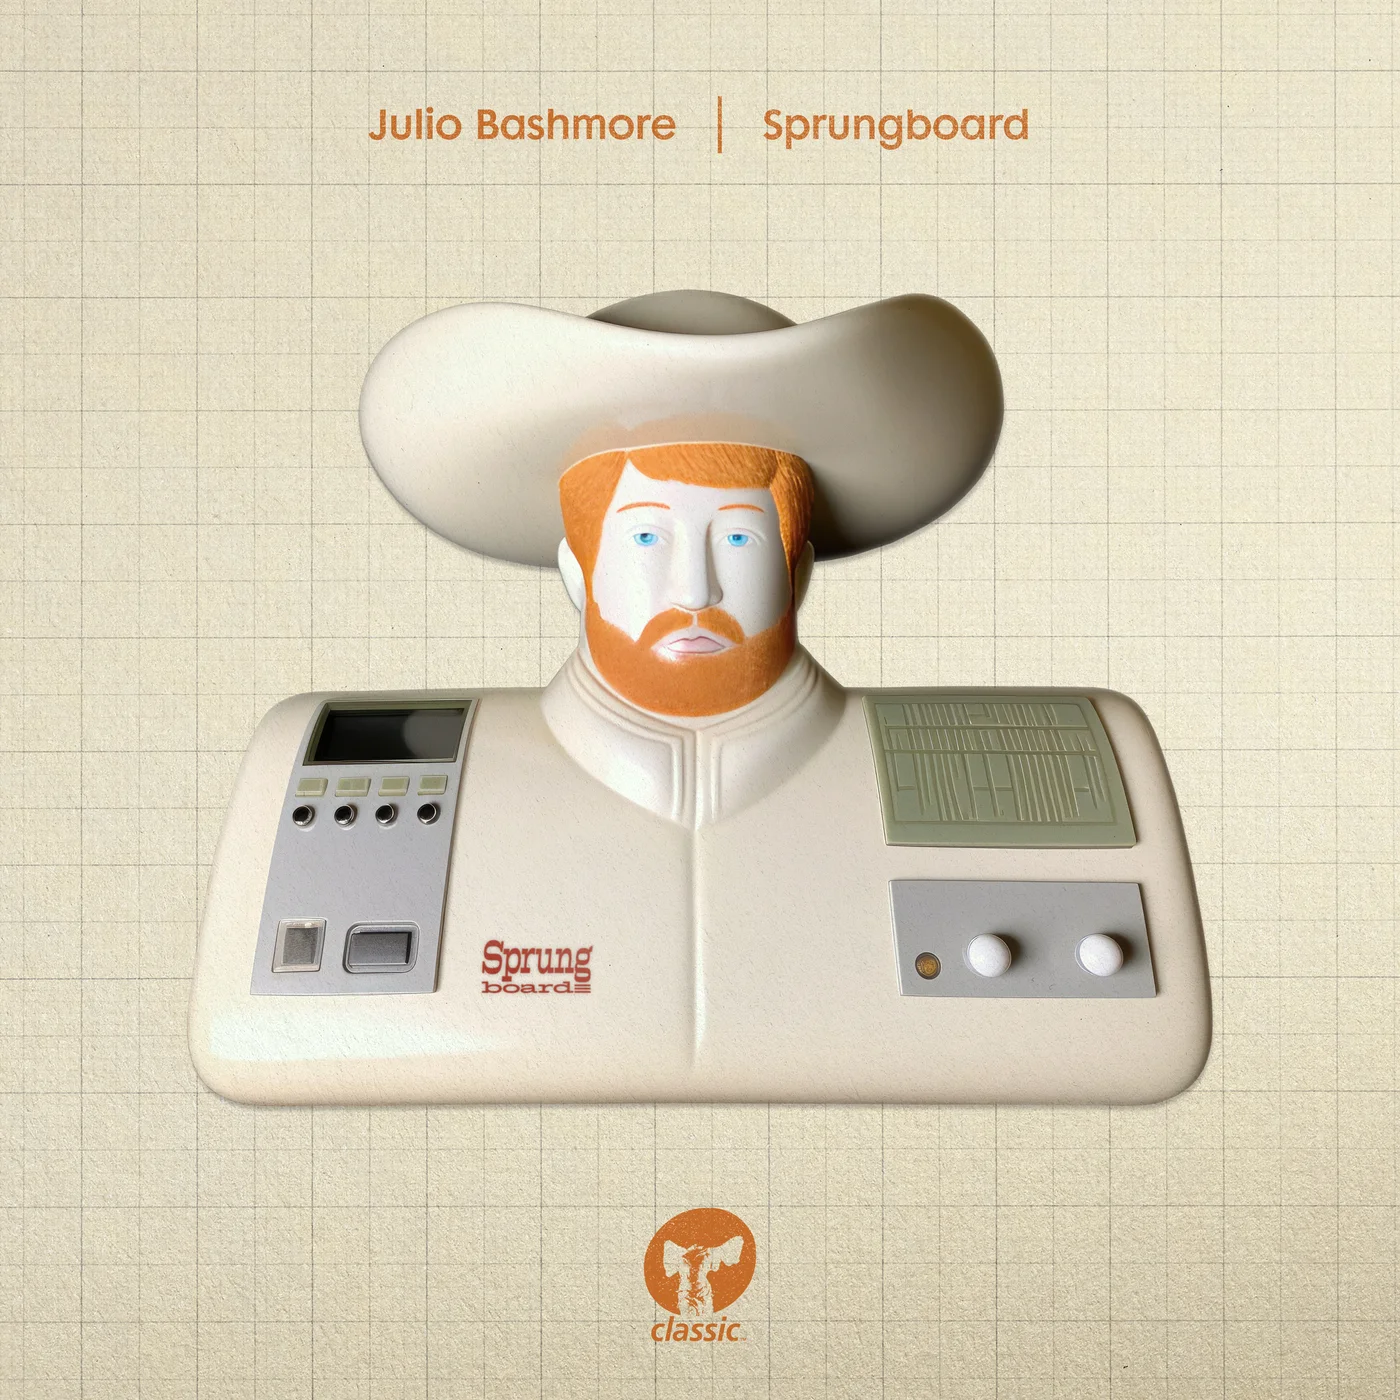 julio-bashmore-sprungboard-classic-music-company